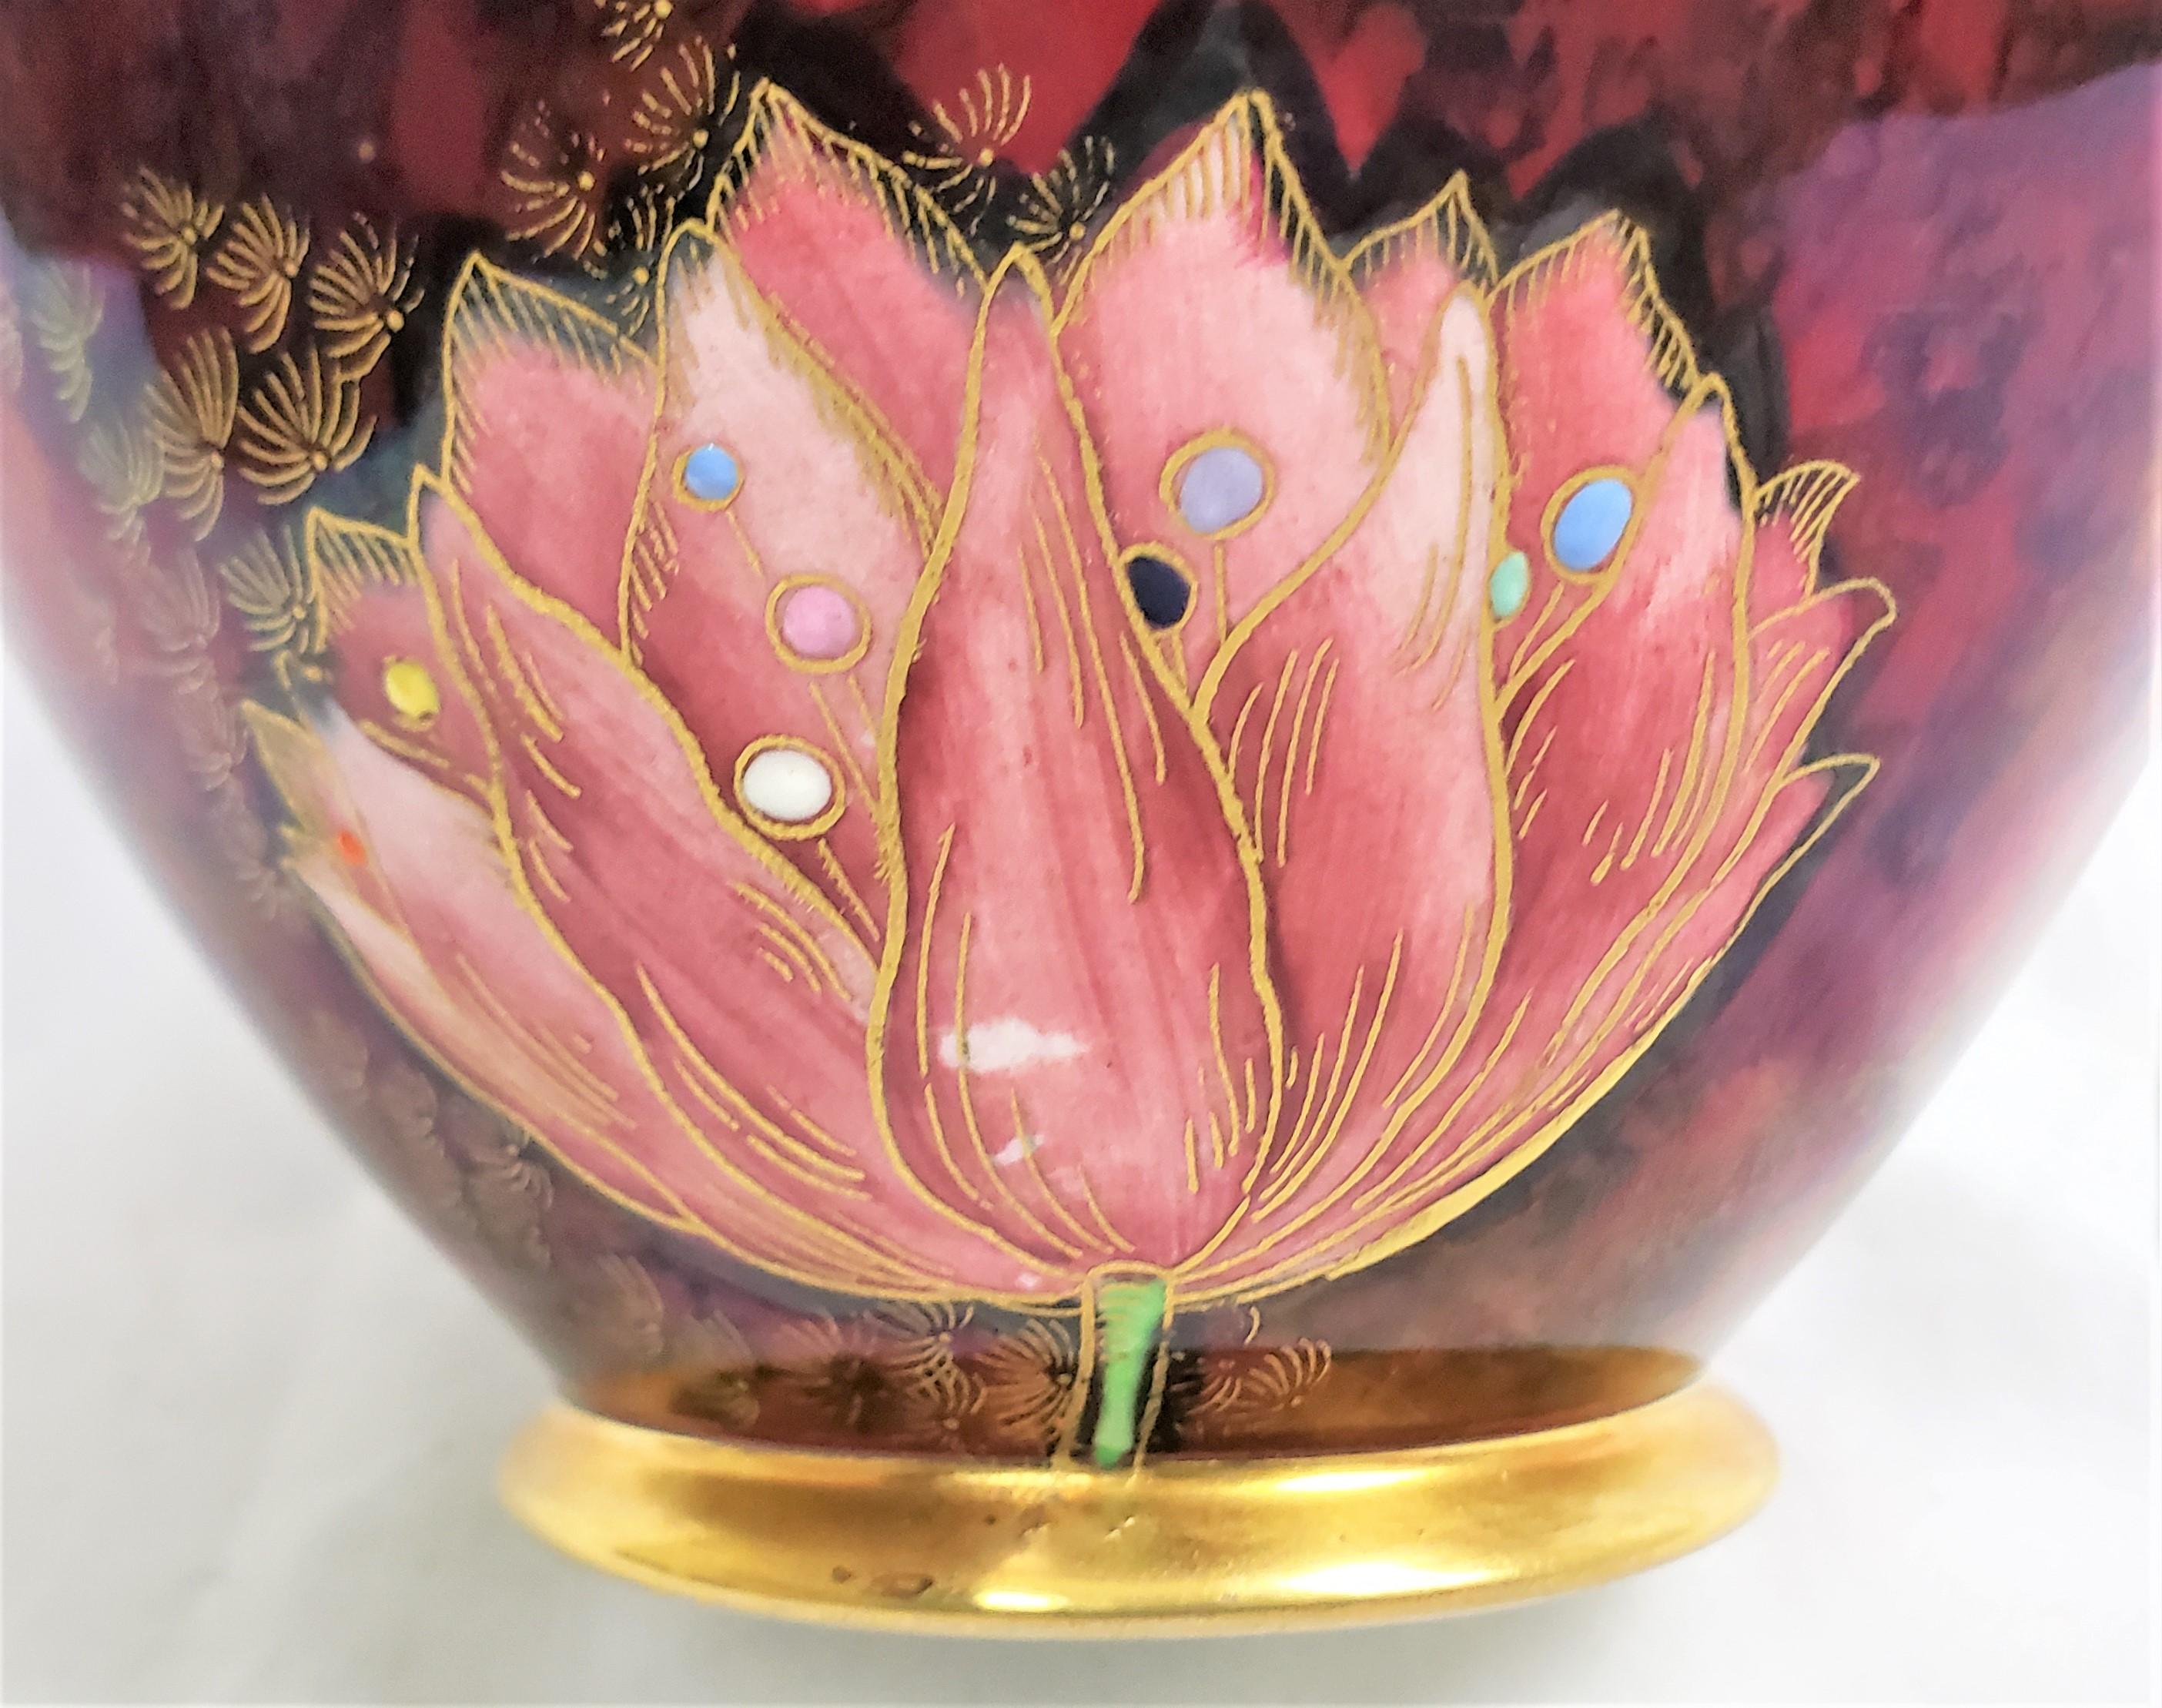 Antique Art Deco Era Carlton Ware Vase with Asian Inspired Decoration 7